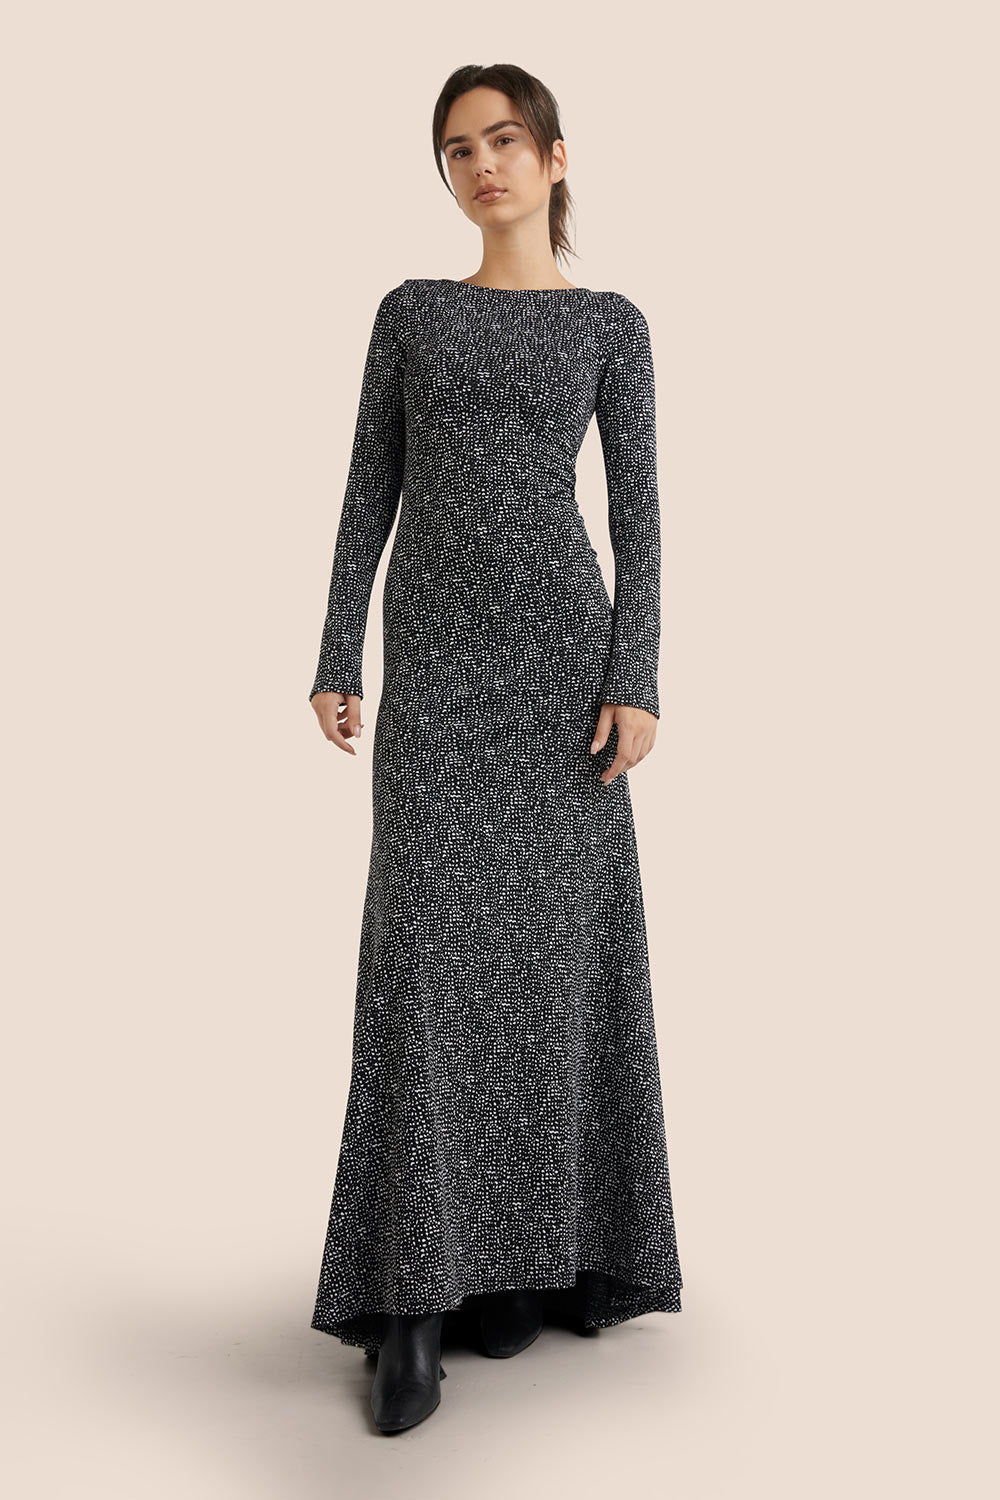 Sophya Black Long Sleeved Mermaid Maxi Dress | La petite garçonne  on model